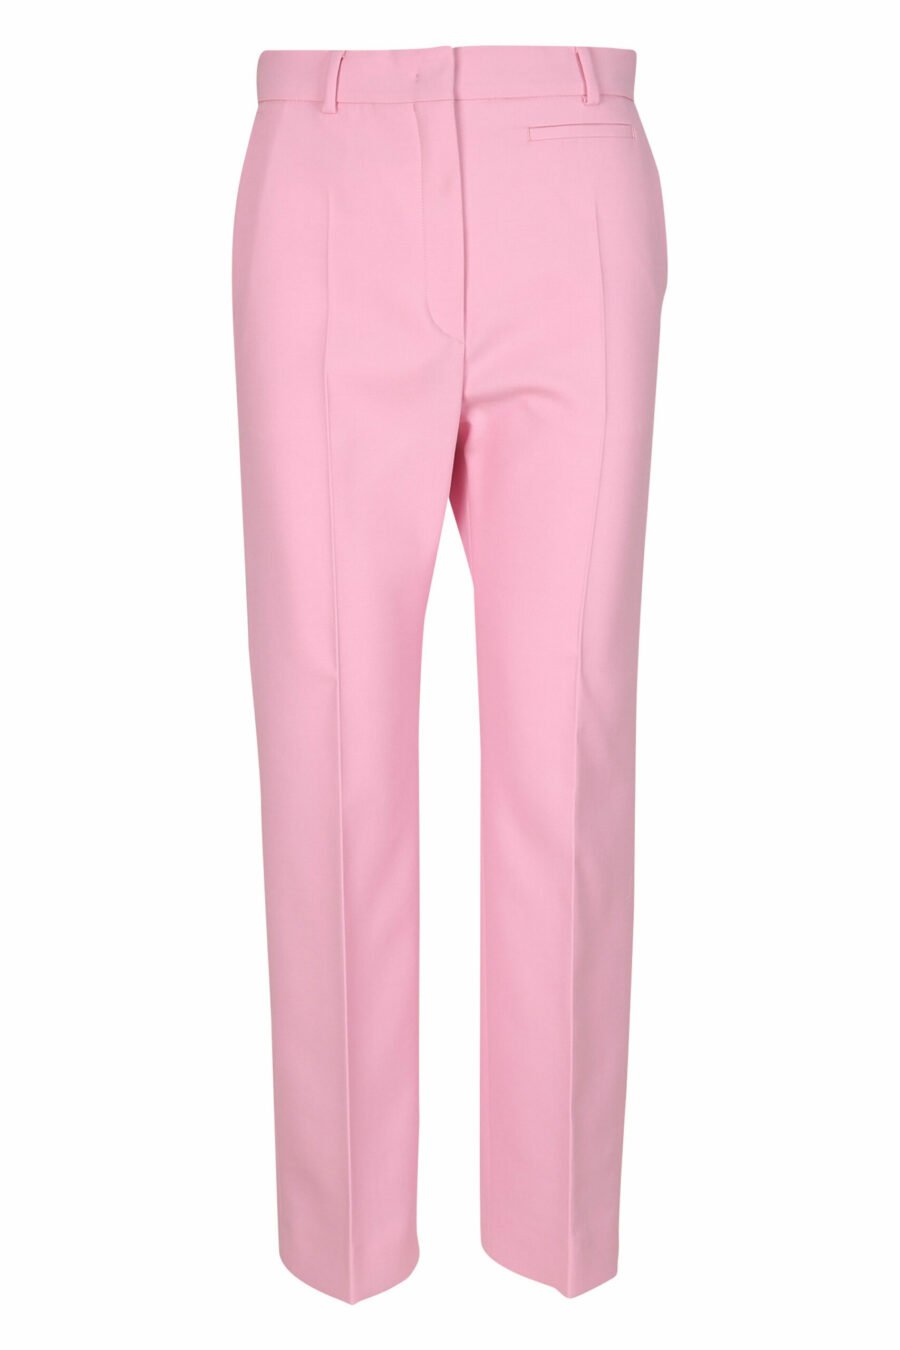 Pantalón rosa ancho - 21310741060053 scaled